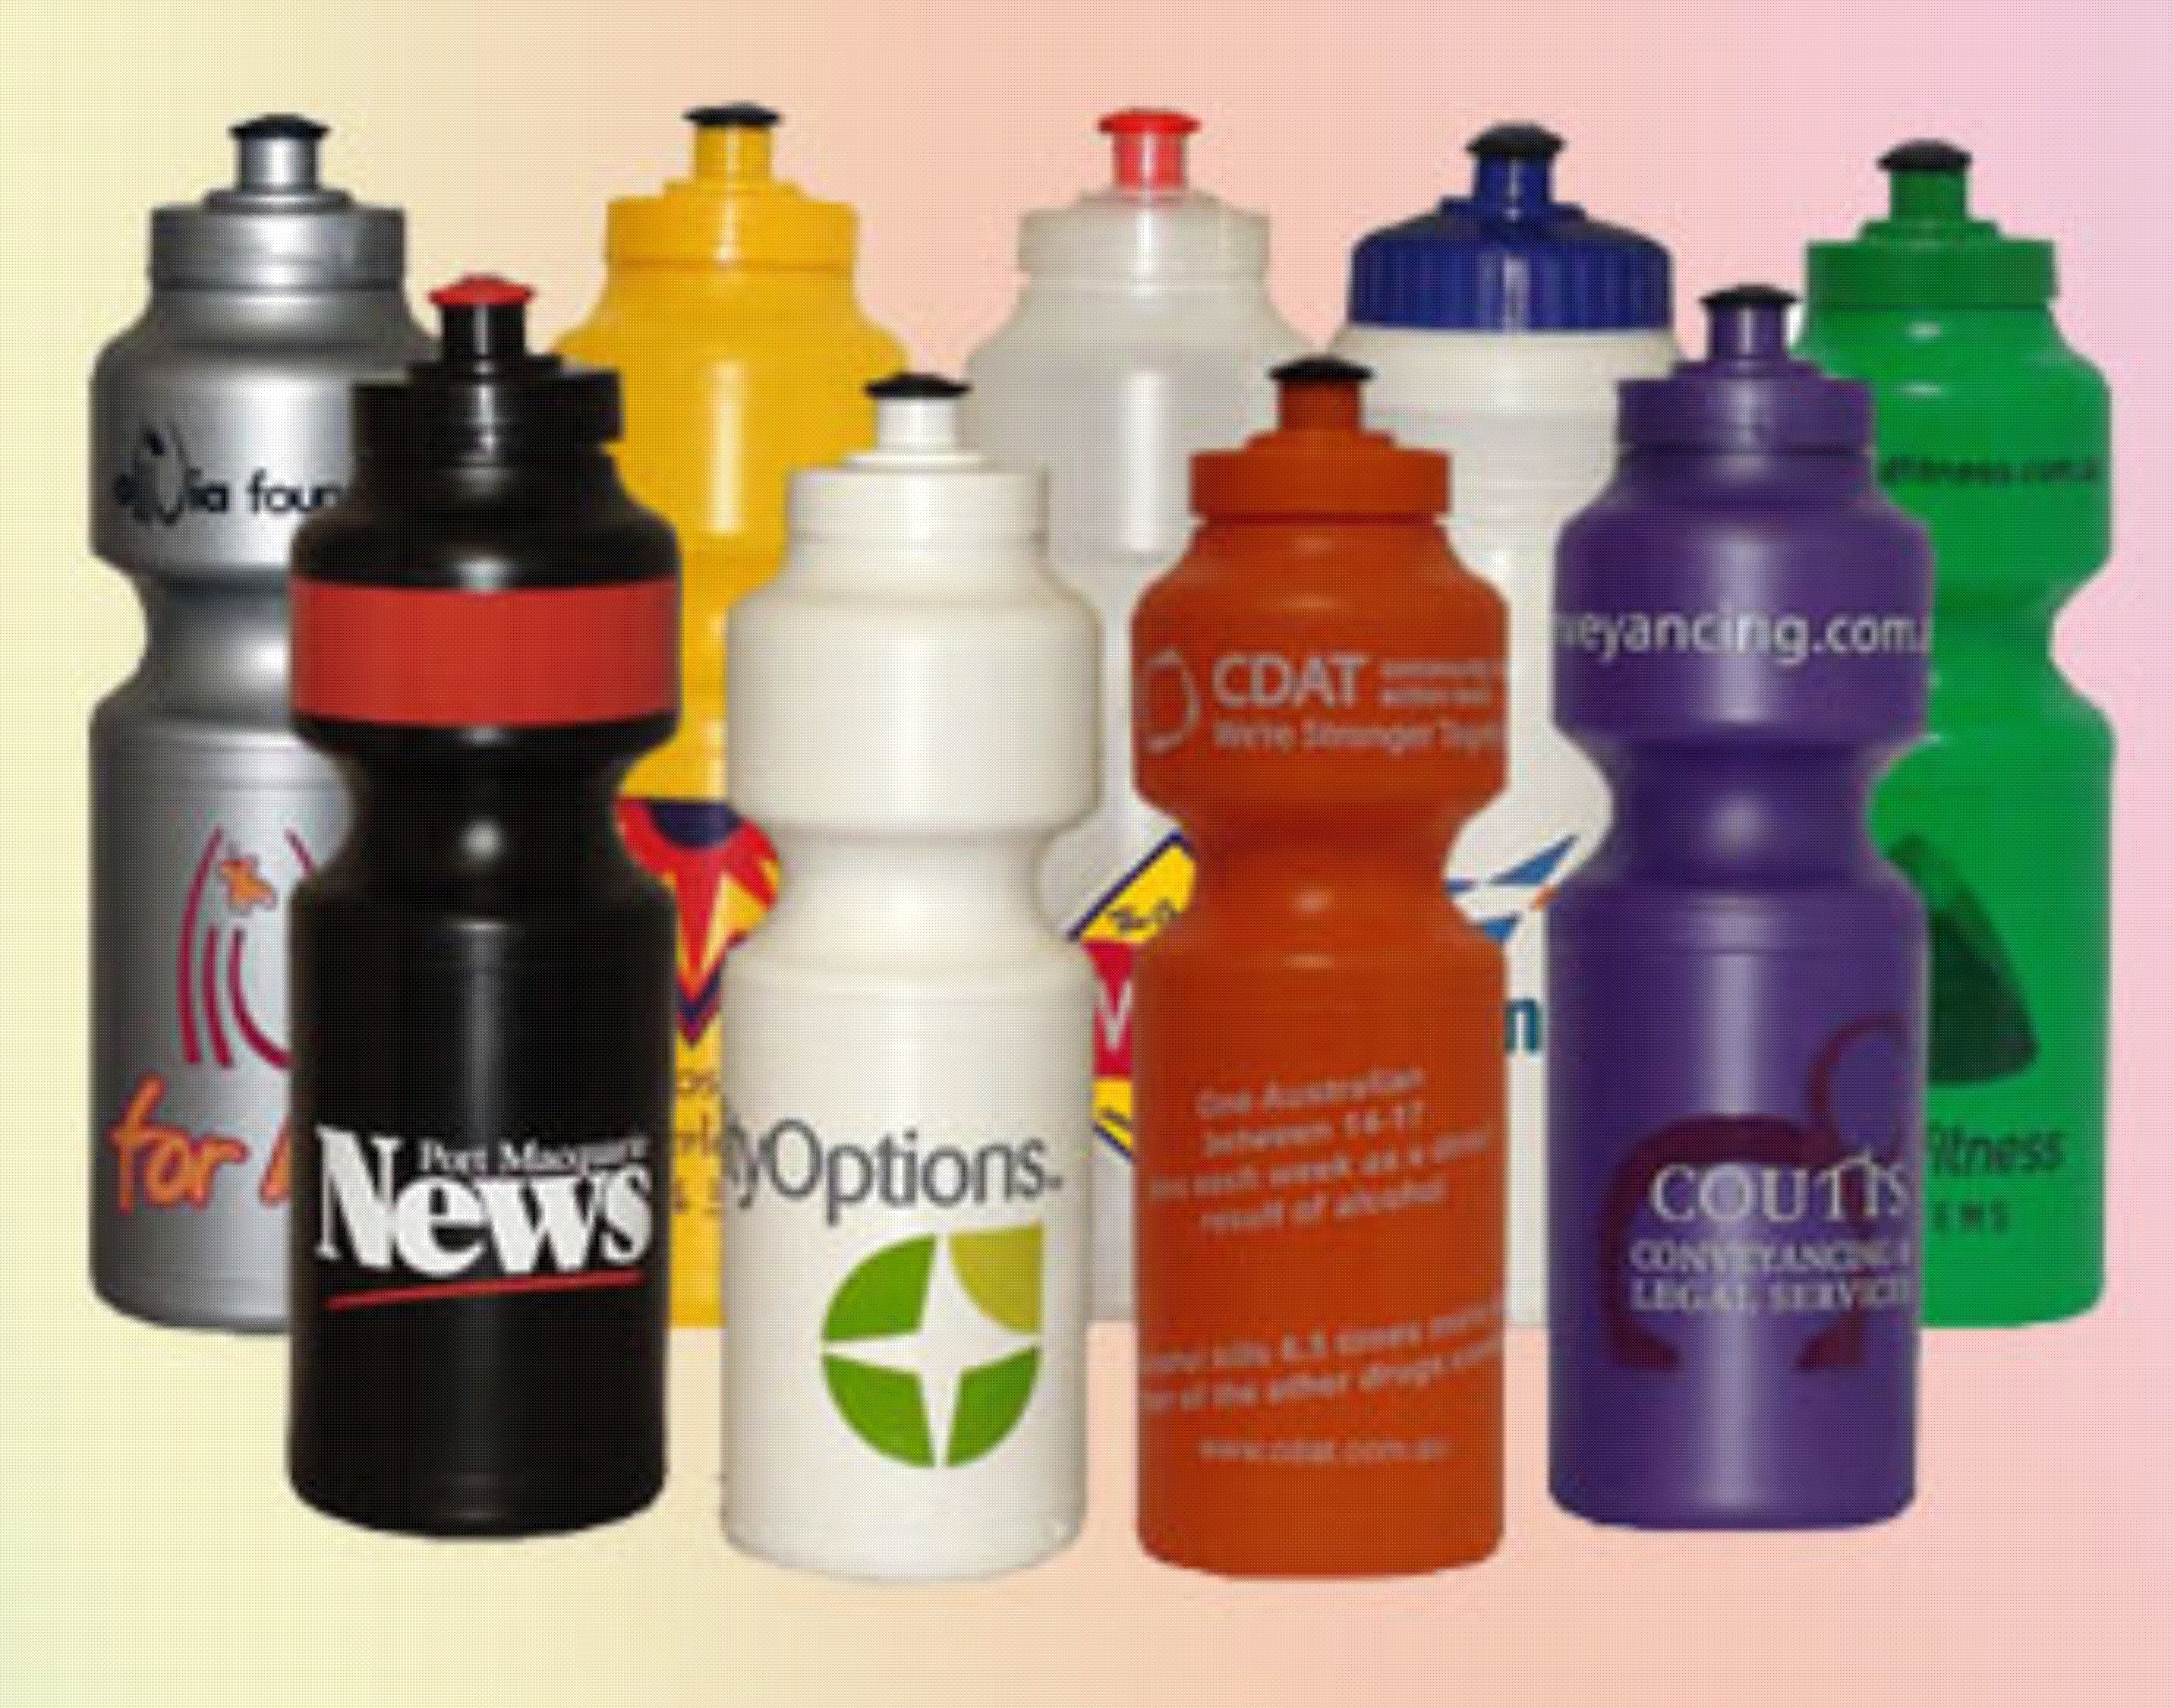 Plastic-Water-Bottles